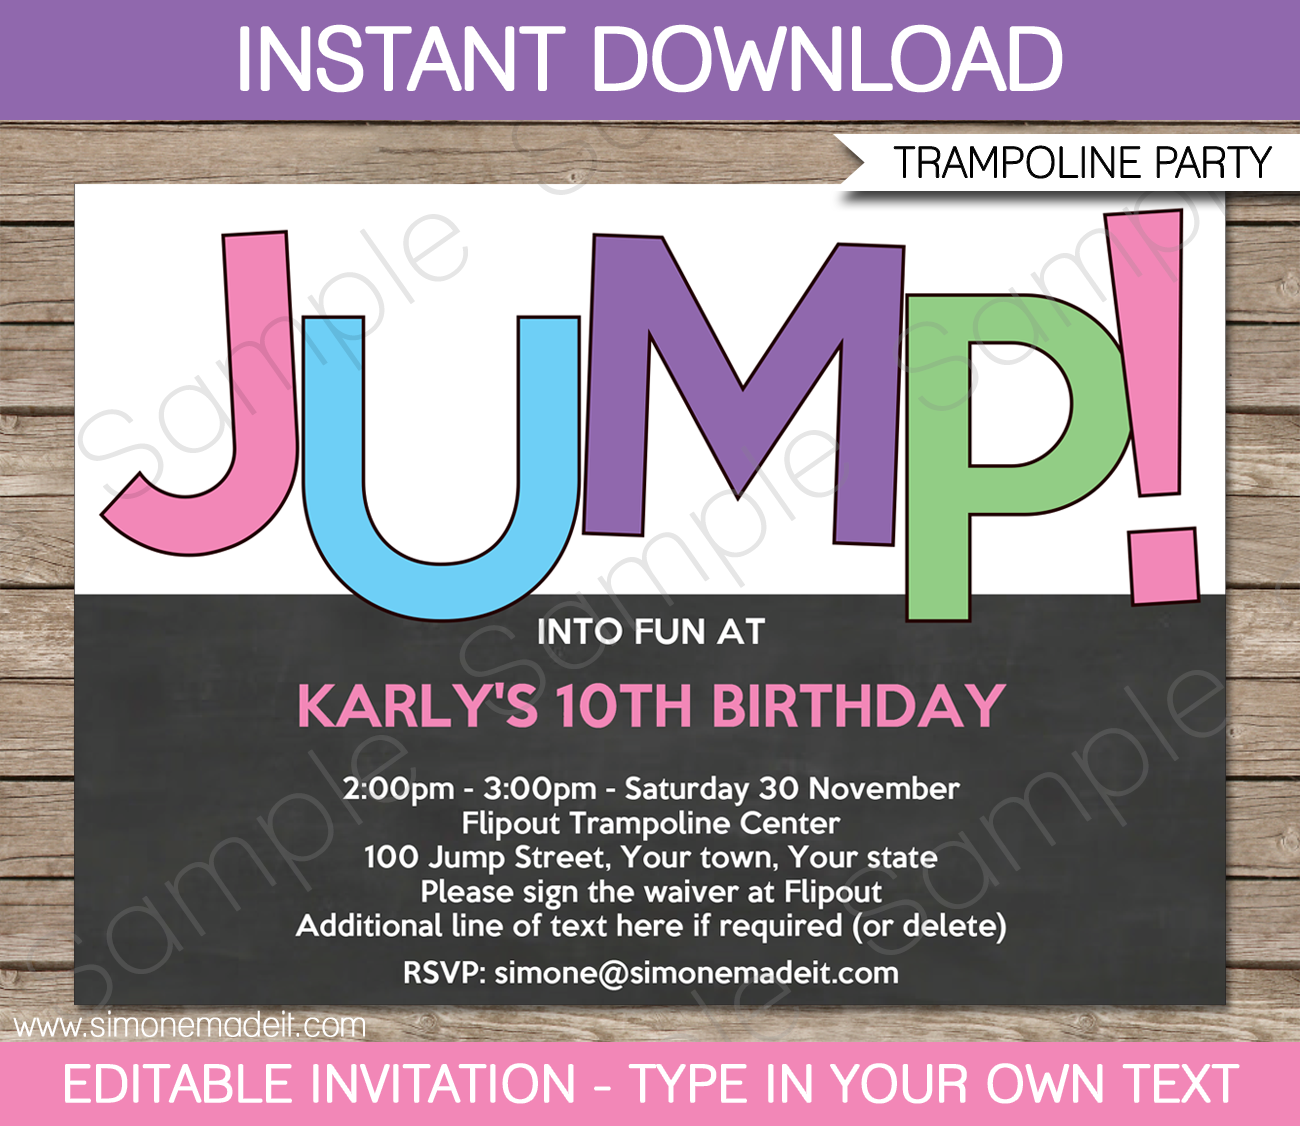 Trampoline Birthday Party Invitations | Girls | Editable DIY Theme Template | INSTANT DOWNLOAD $7.50 via SIMONEmadeit.com